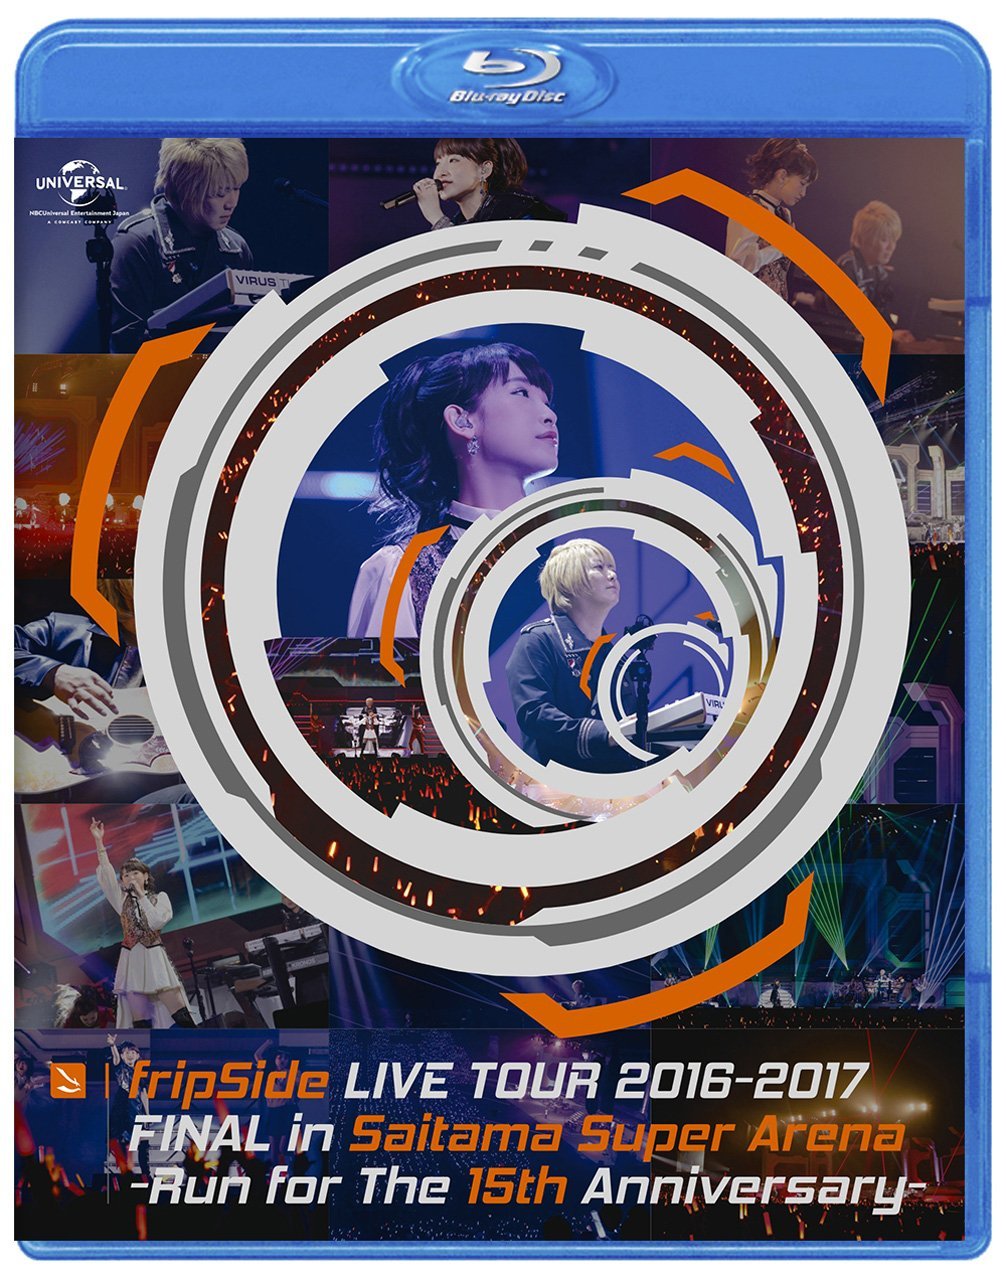 FripSide LIVE TOUR 2016-2017 FINAL 通常盘 BD.jpg